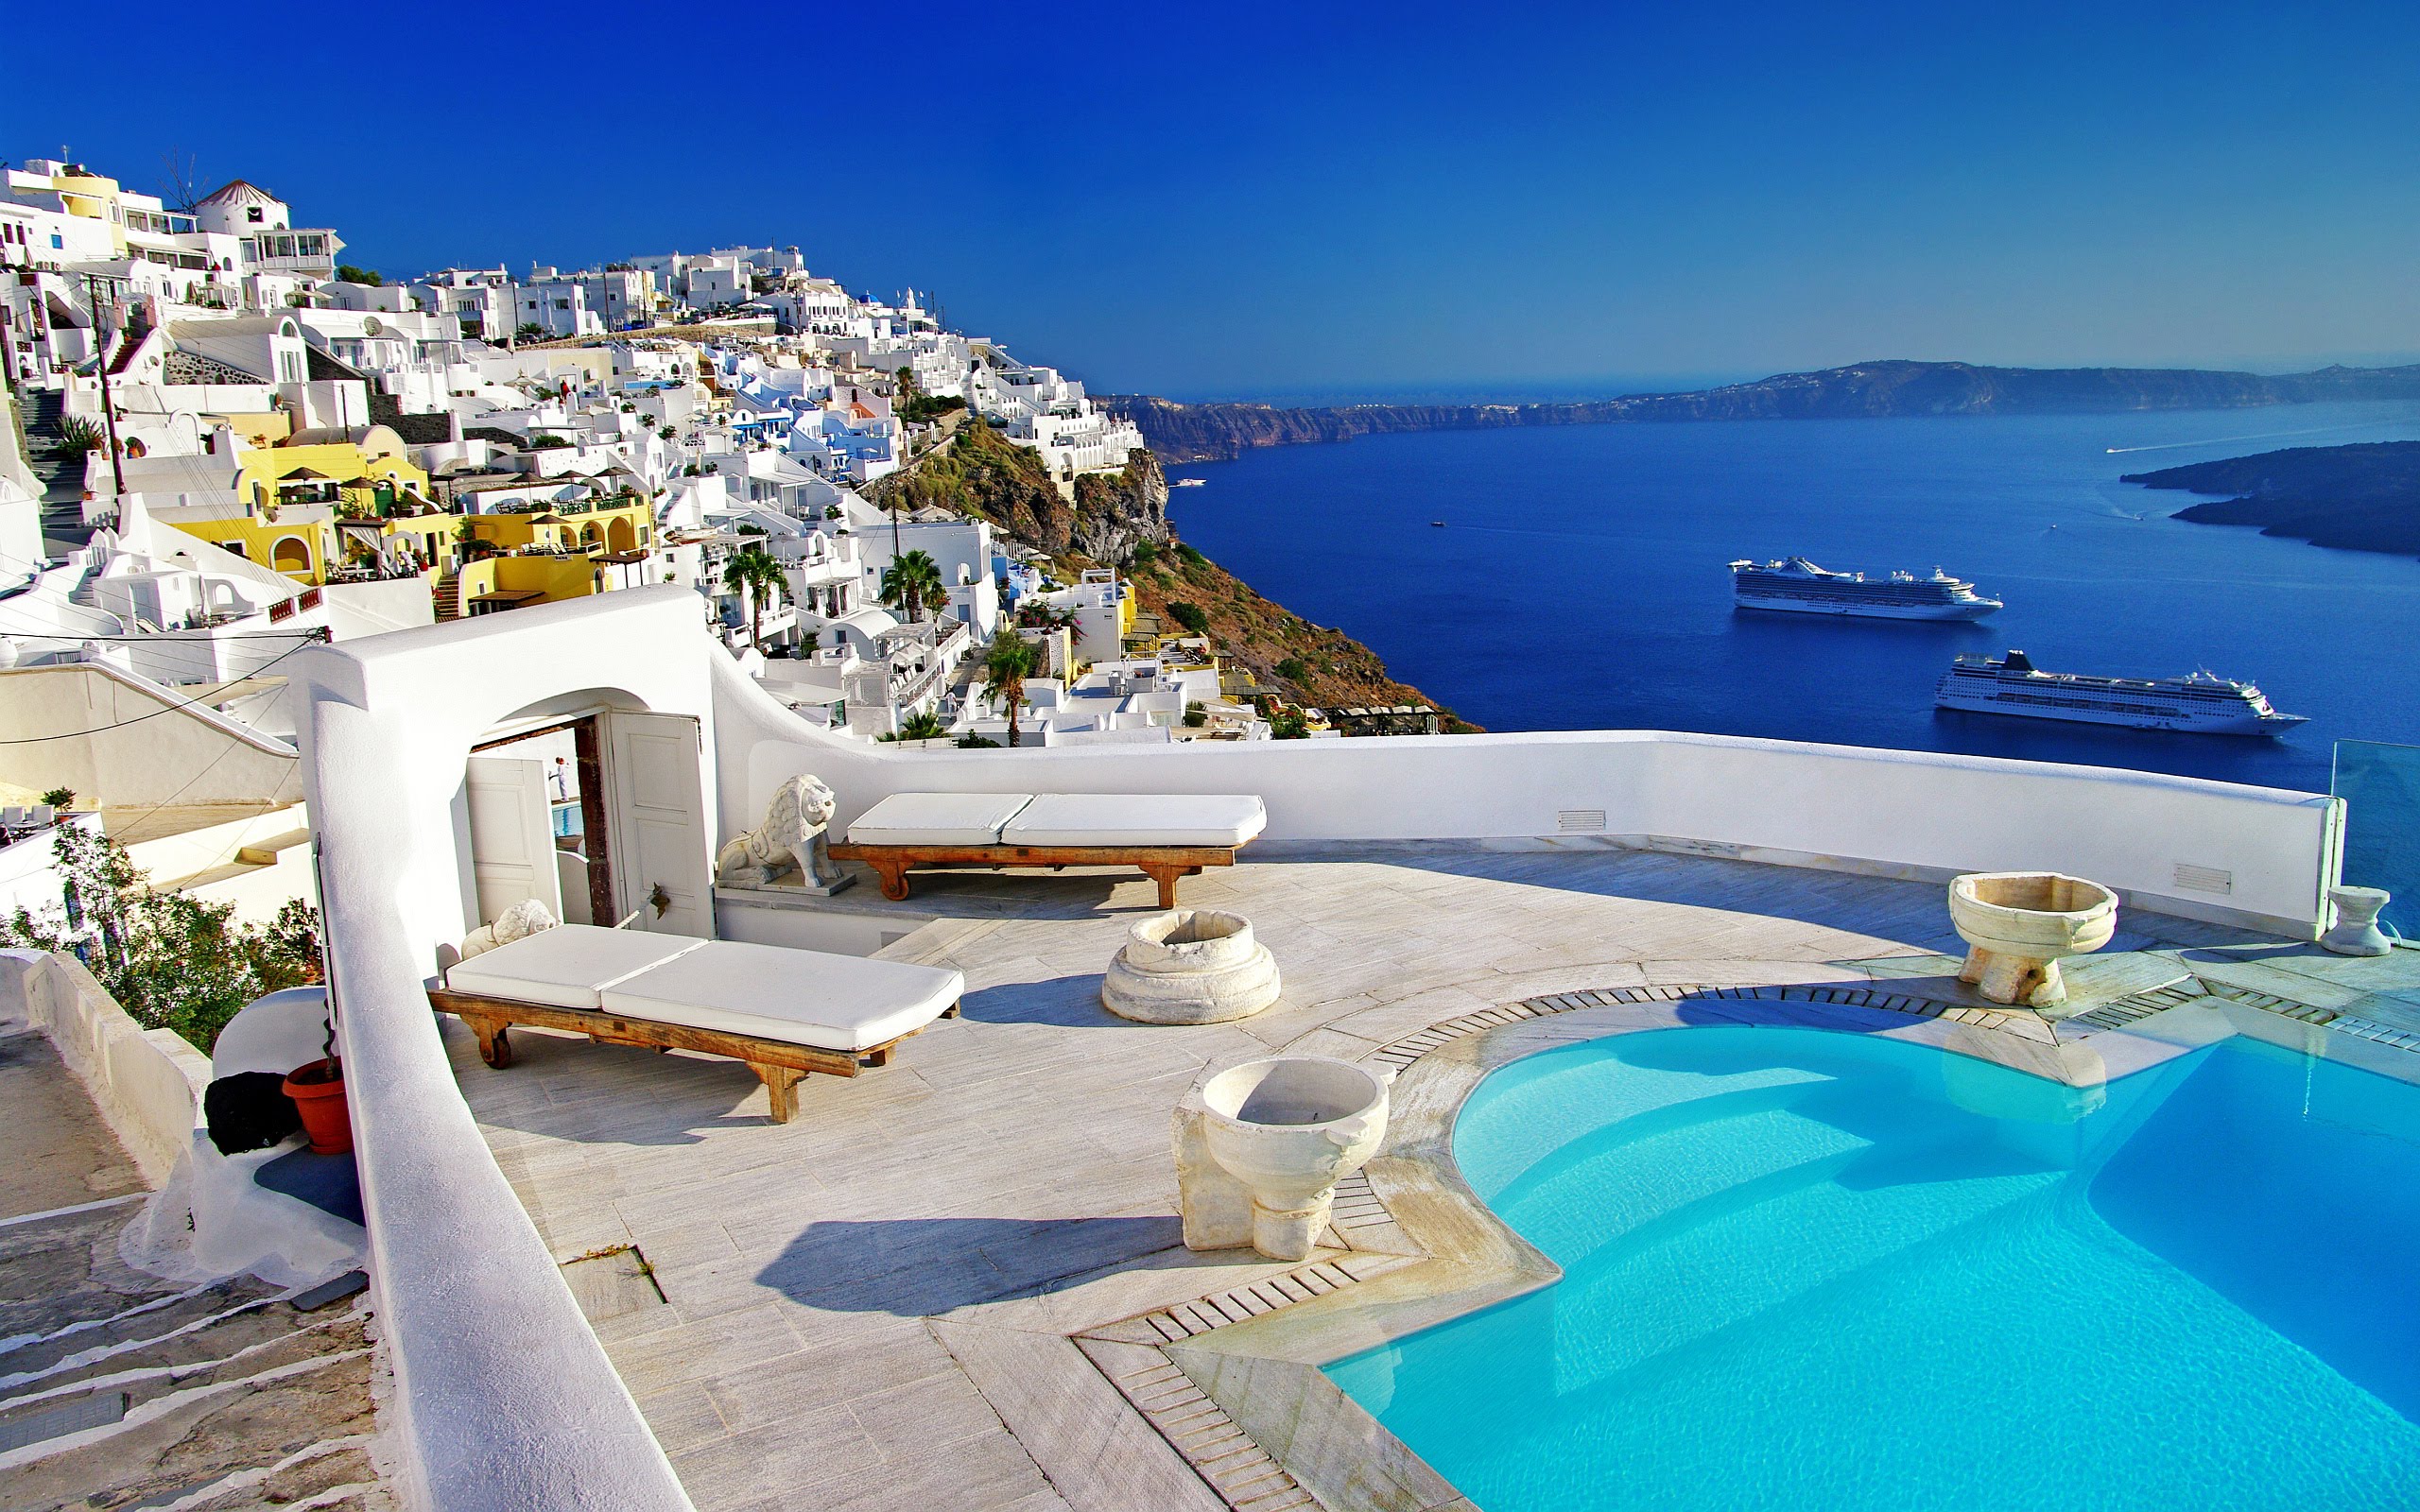 Incredible Santorini - Greece - YouTube